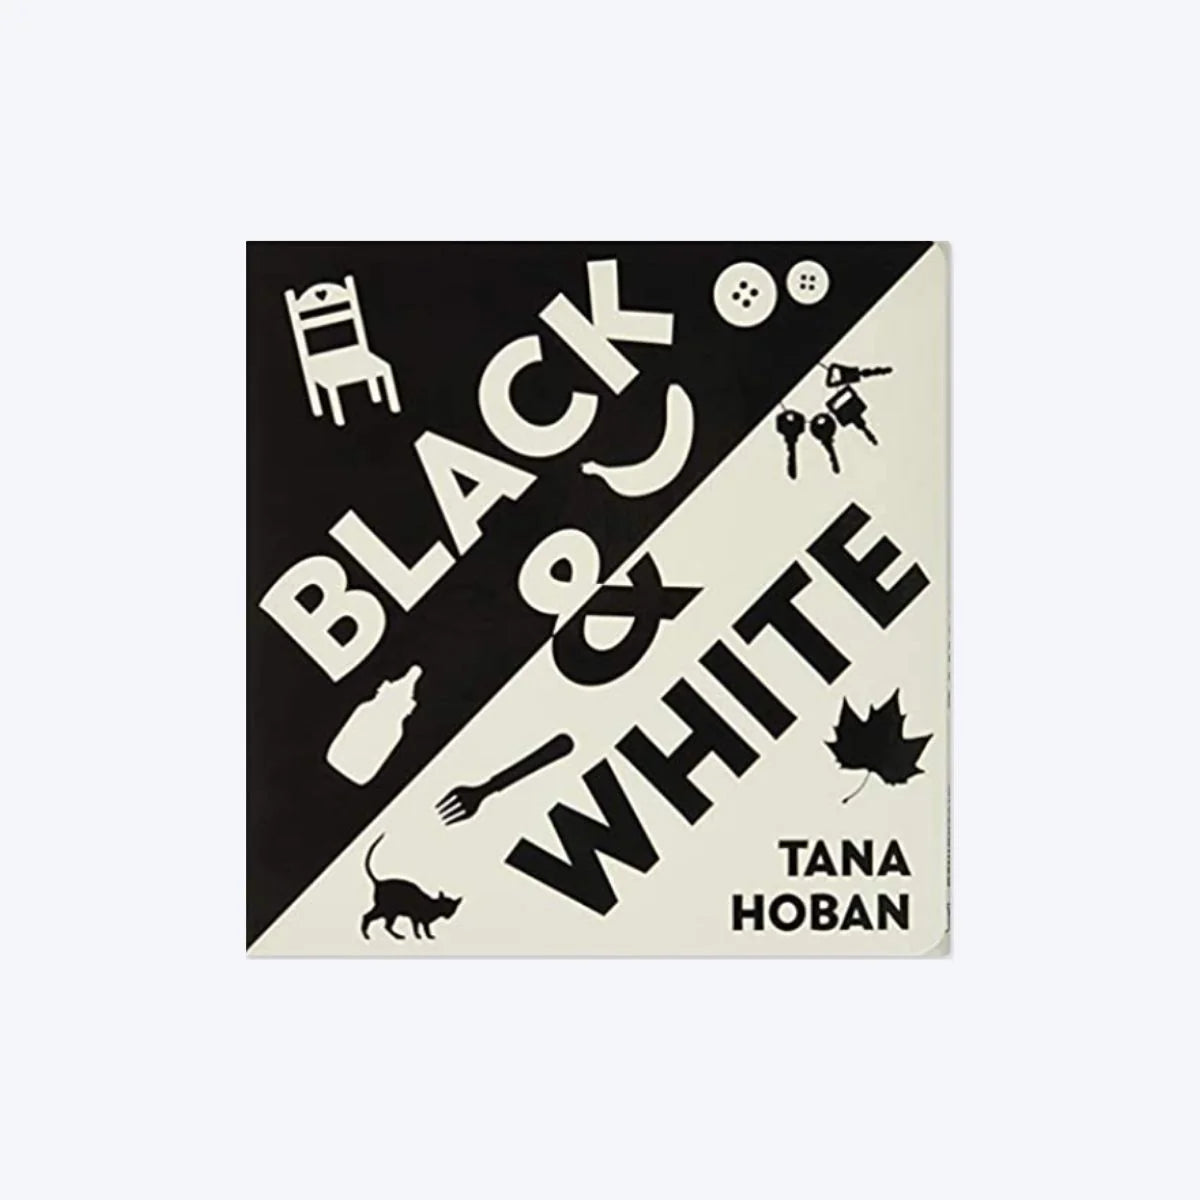 Black and White board book by Tana Hoban